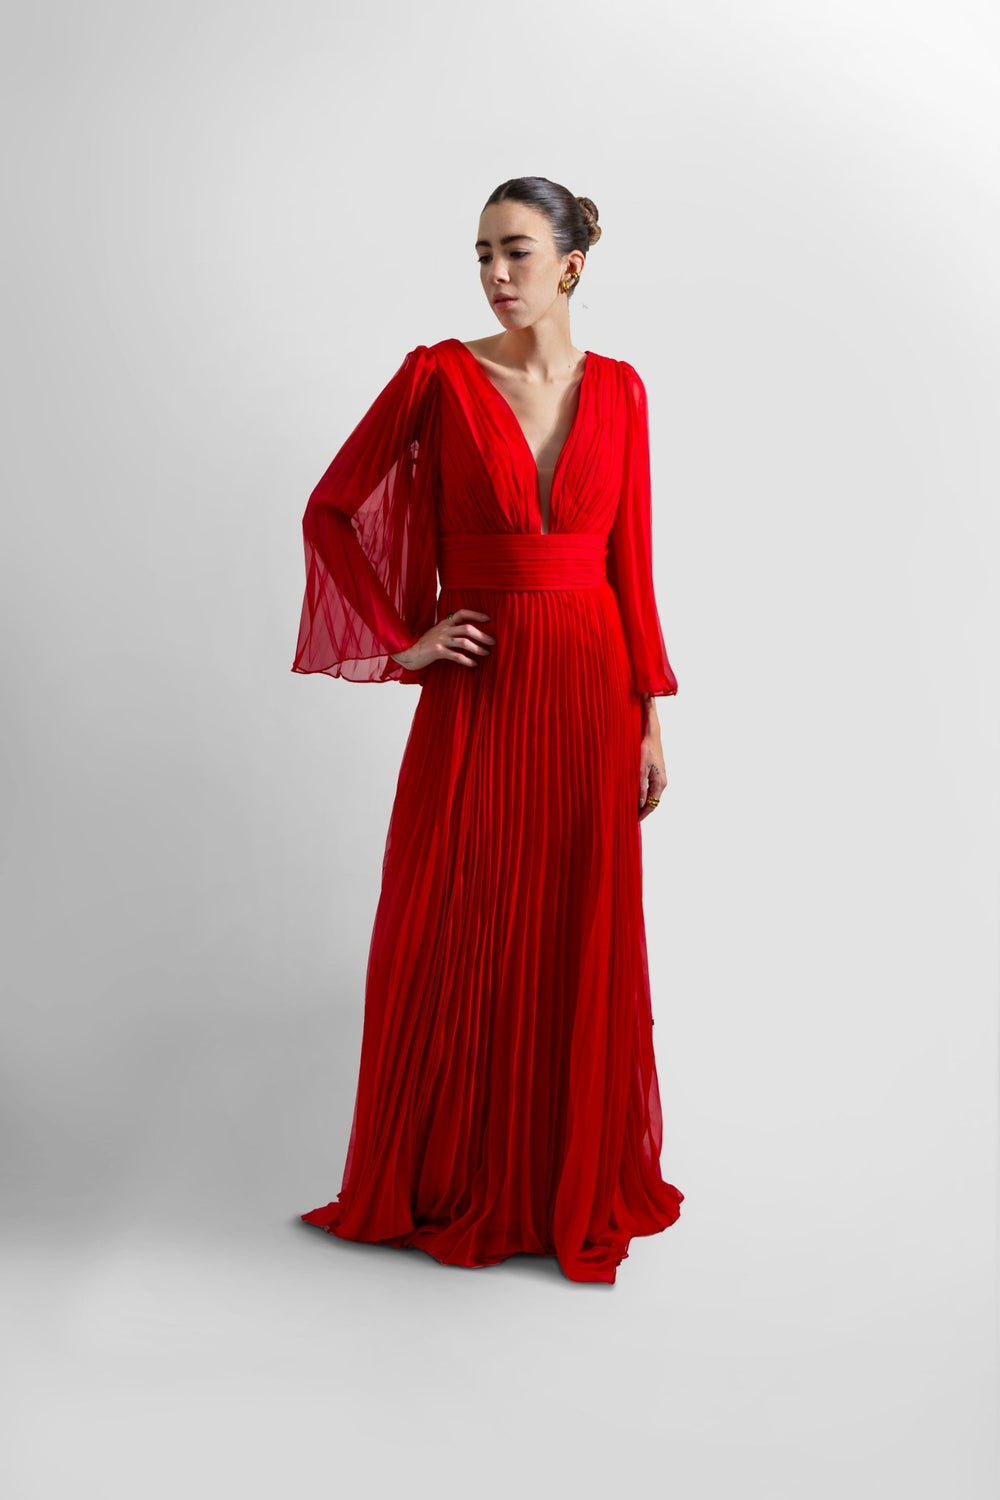 Anika - rojo - Lend the Trend renta de vestidos mexico